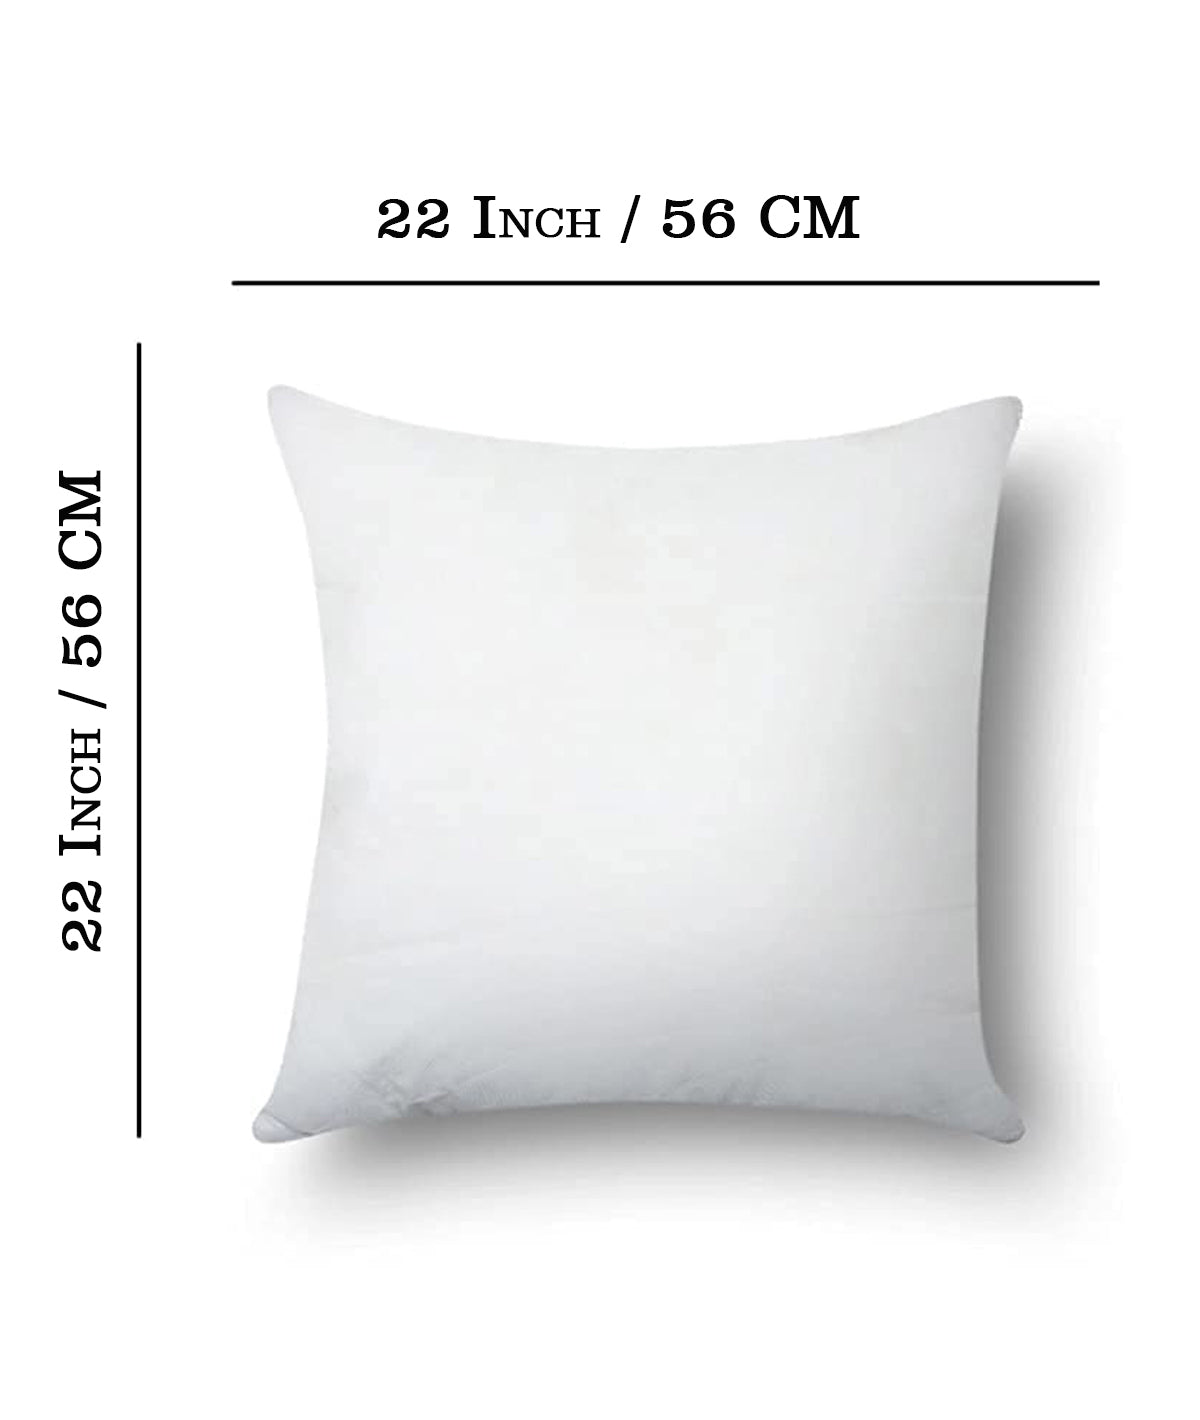 Pluchi Square Cushion Filler (56 cm x 56 cm) (22" x 22")